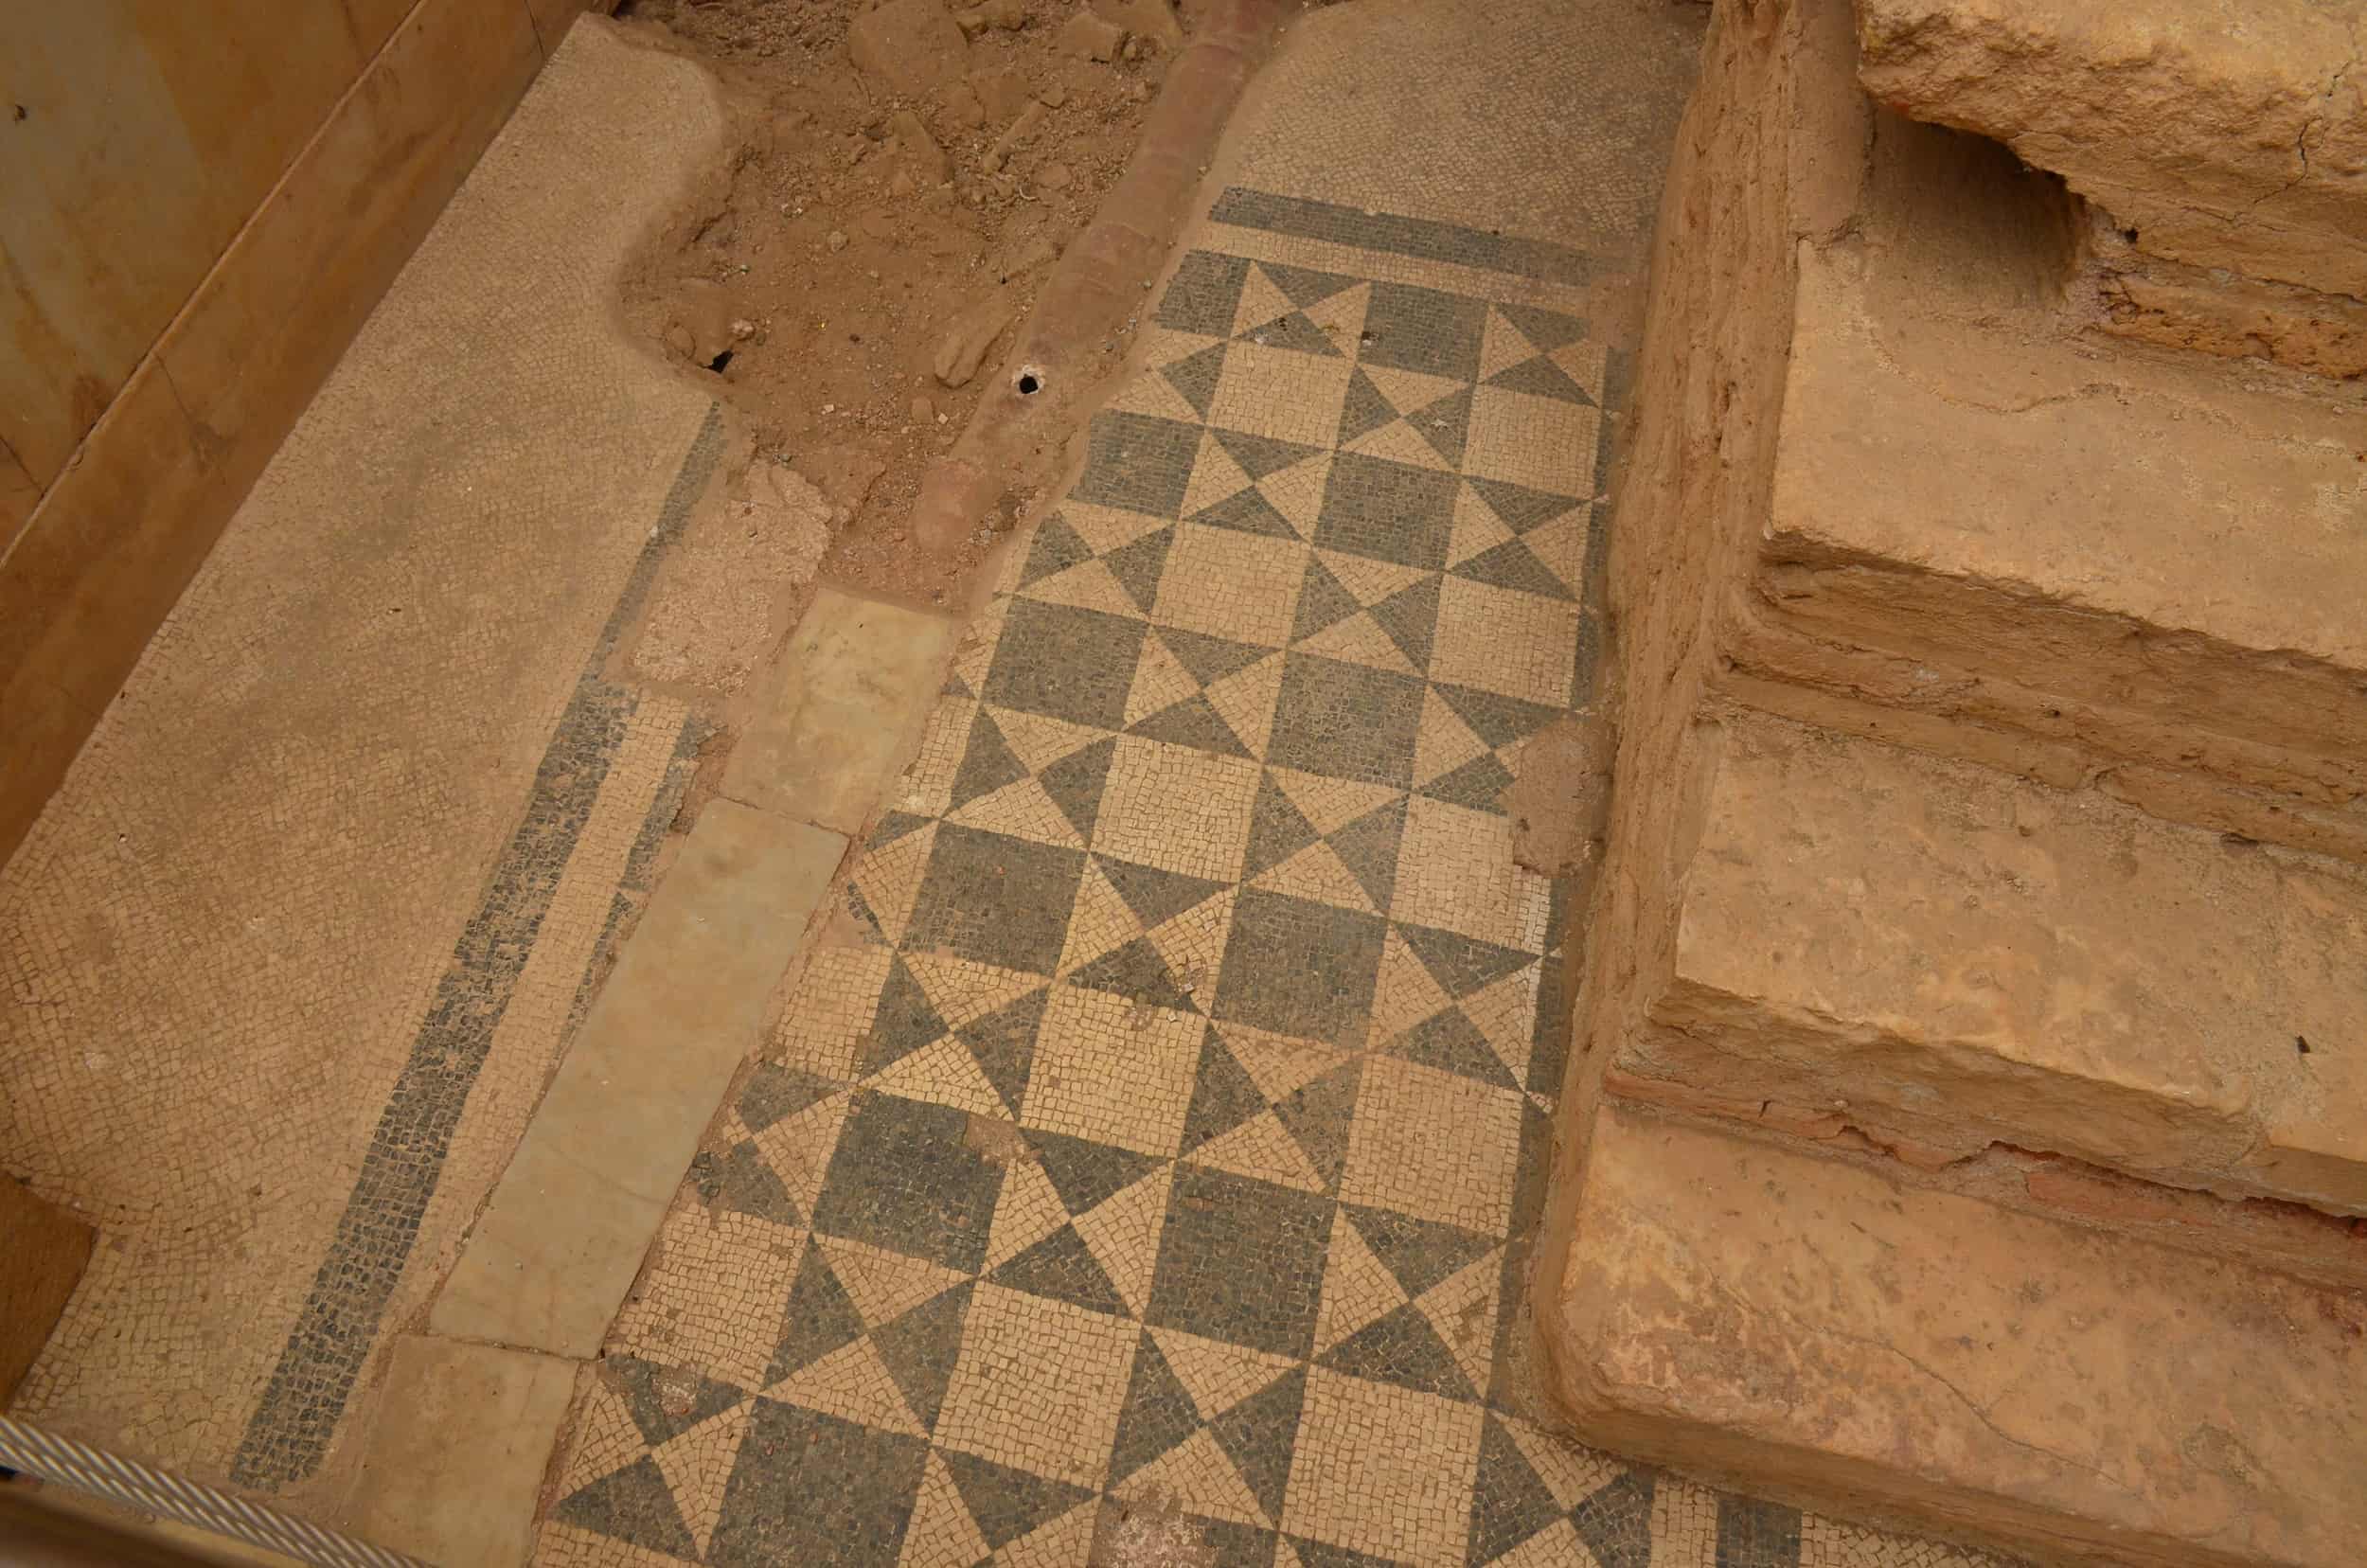 Mosaic floor in Room 36b of Dwelling Unit 6 in the Terrace Houses at Ephesus